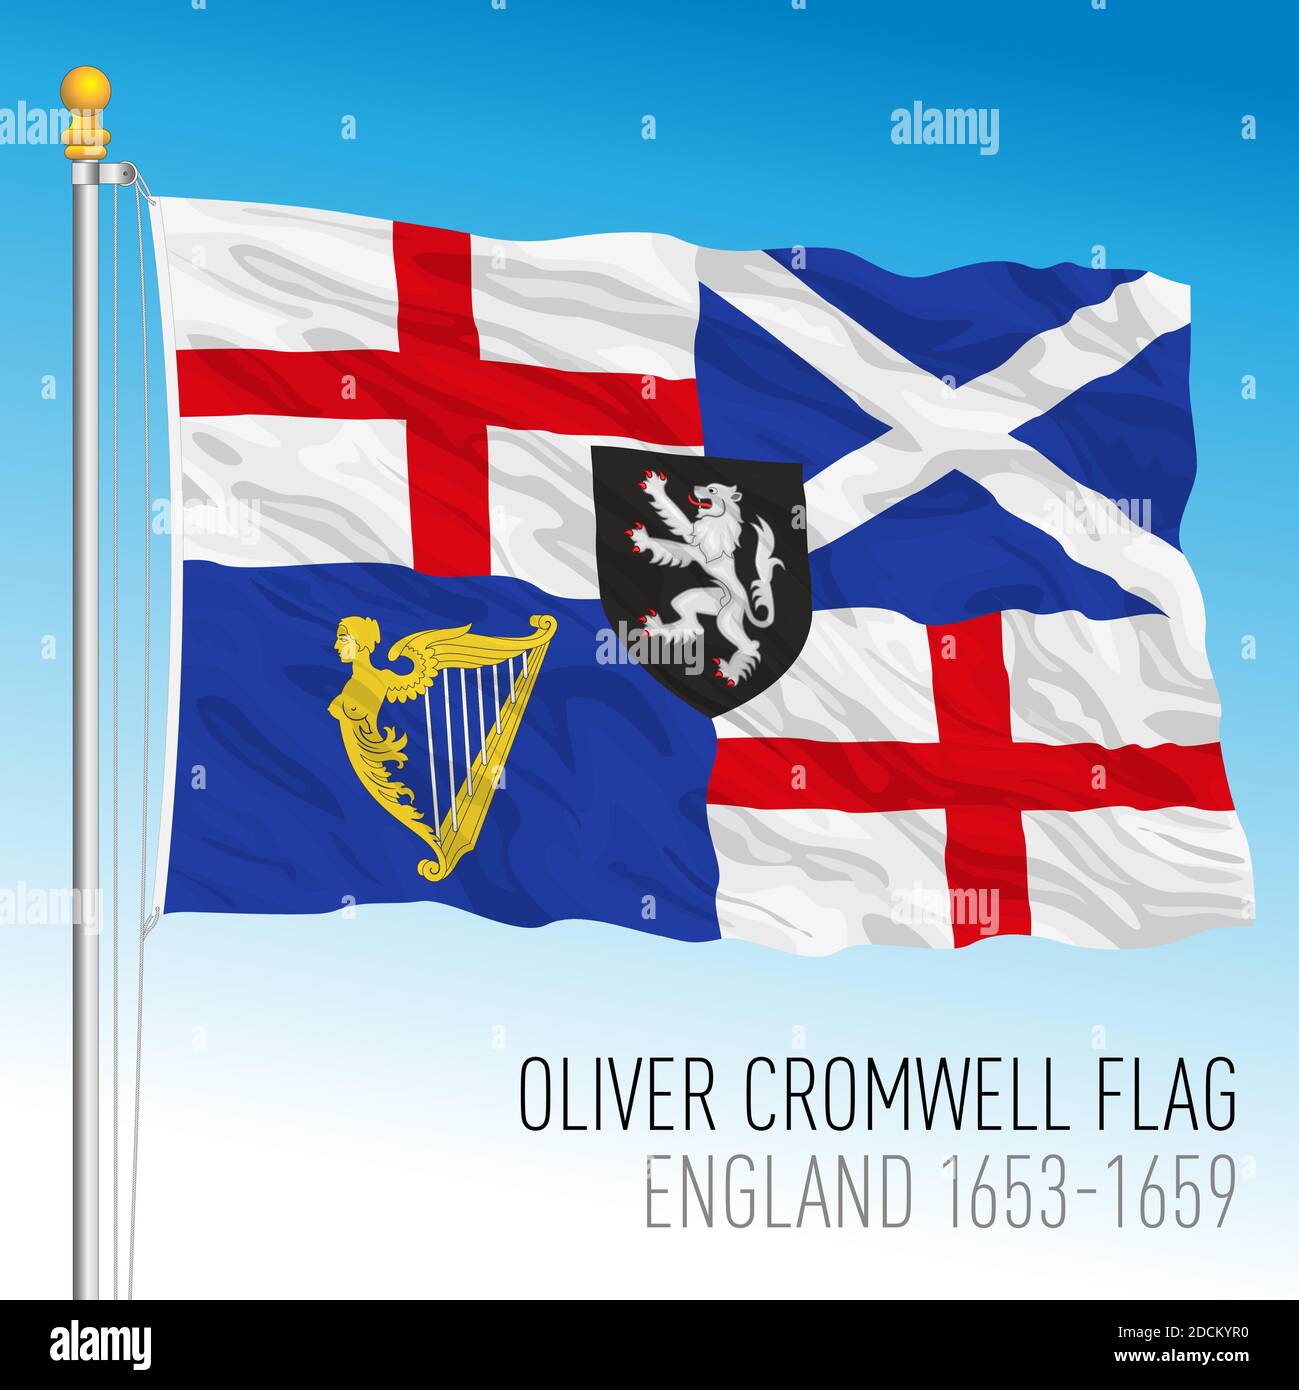 Oliver Cromwell's historical British flag, United Kingdom, 1653-1659, vector illustration Stock Vector